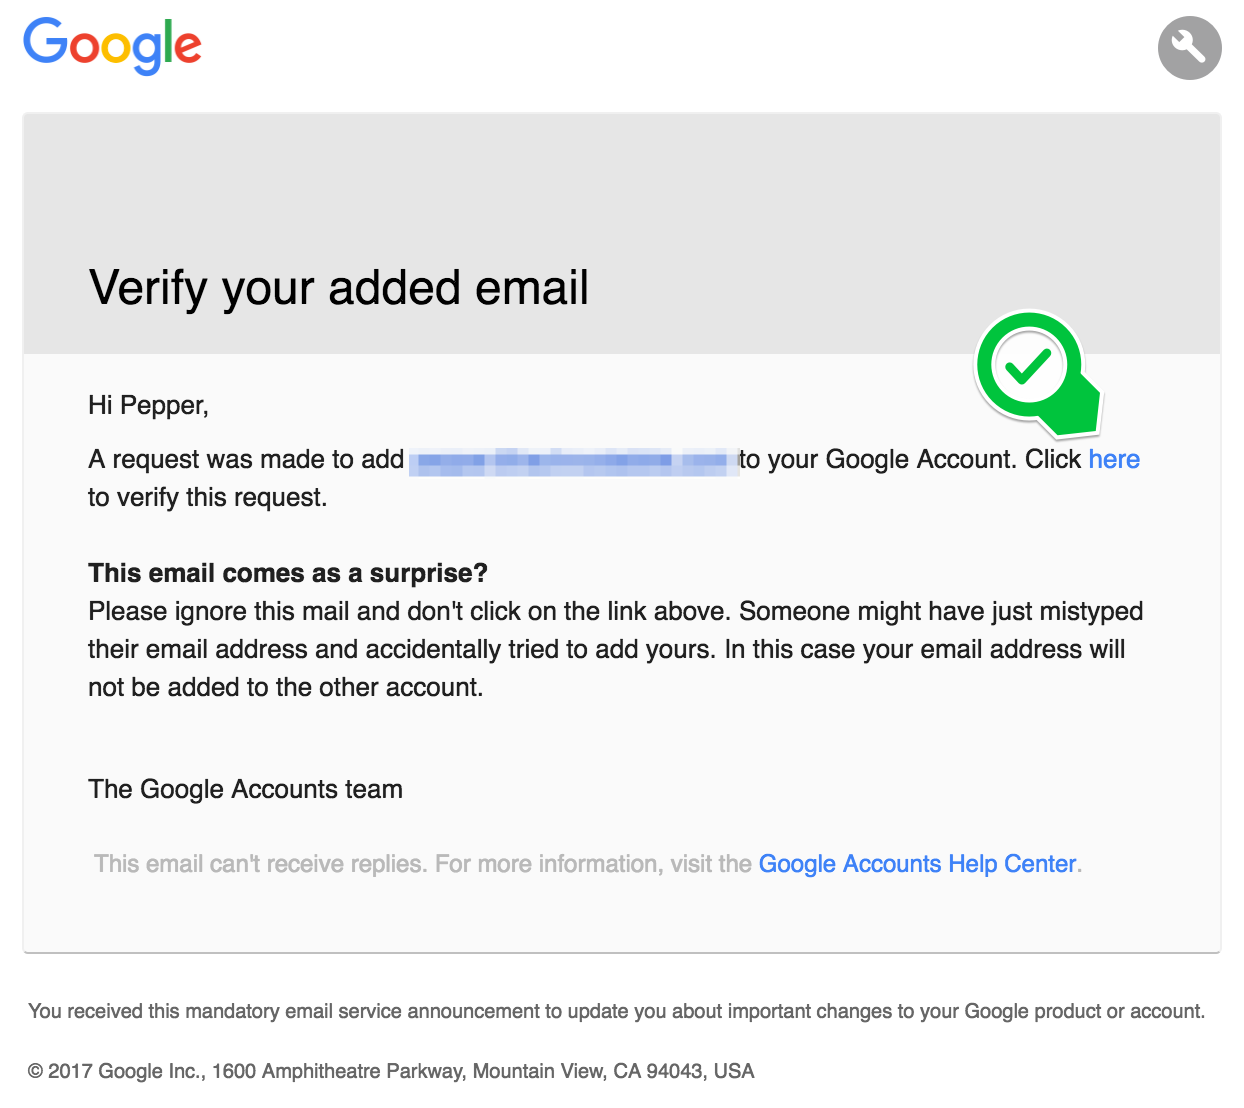 verify email validity